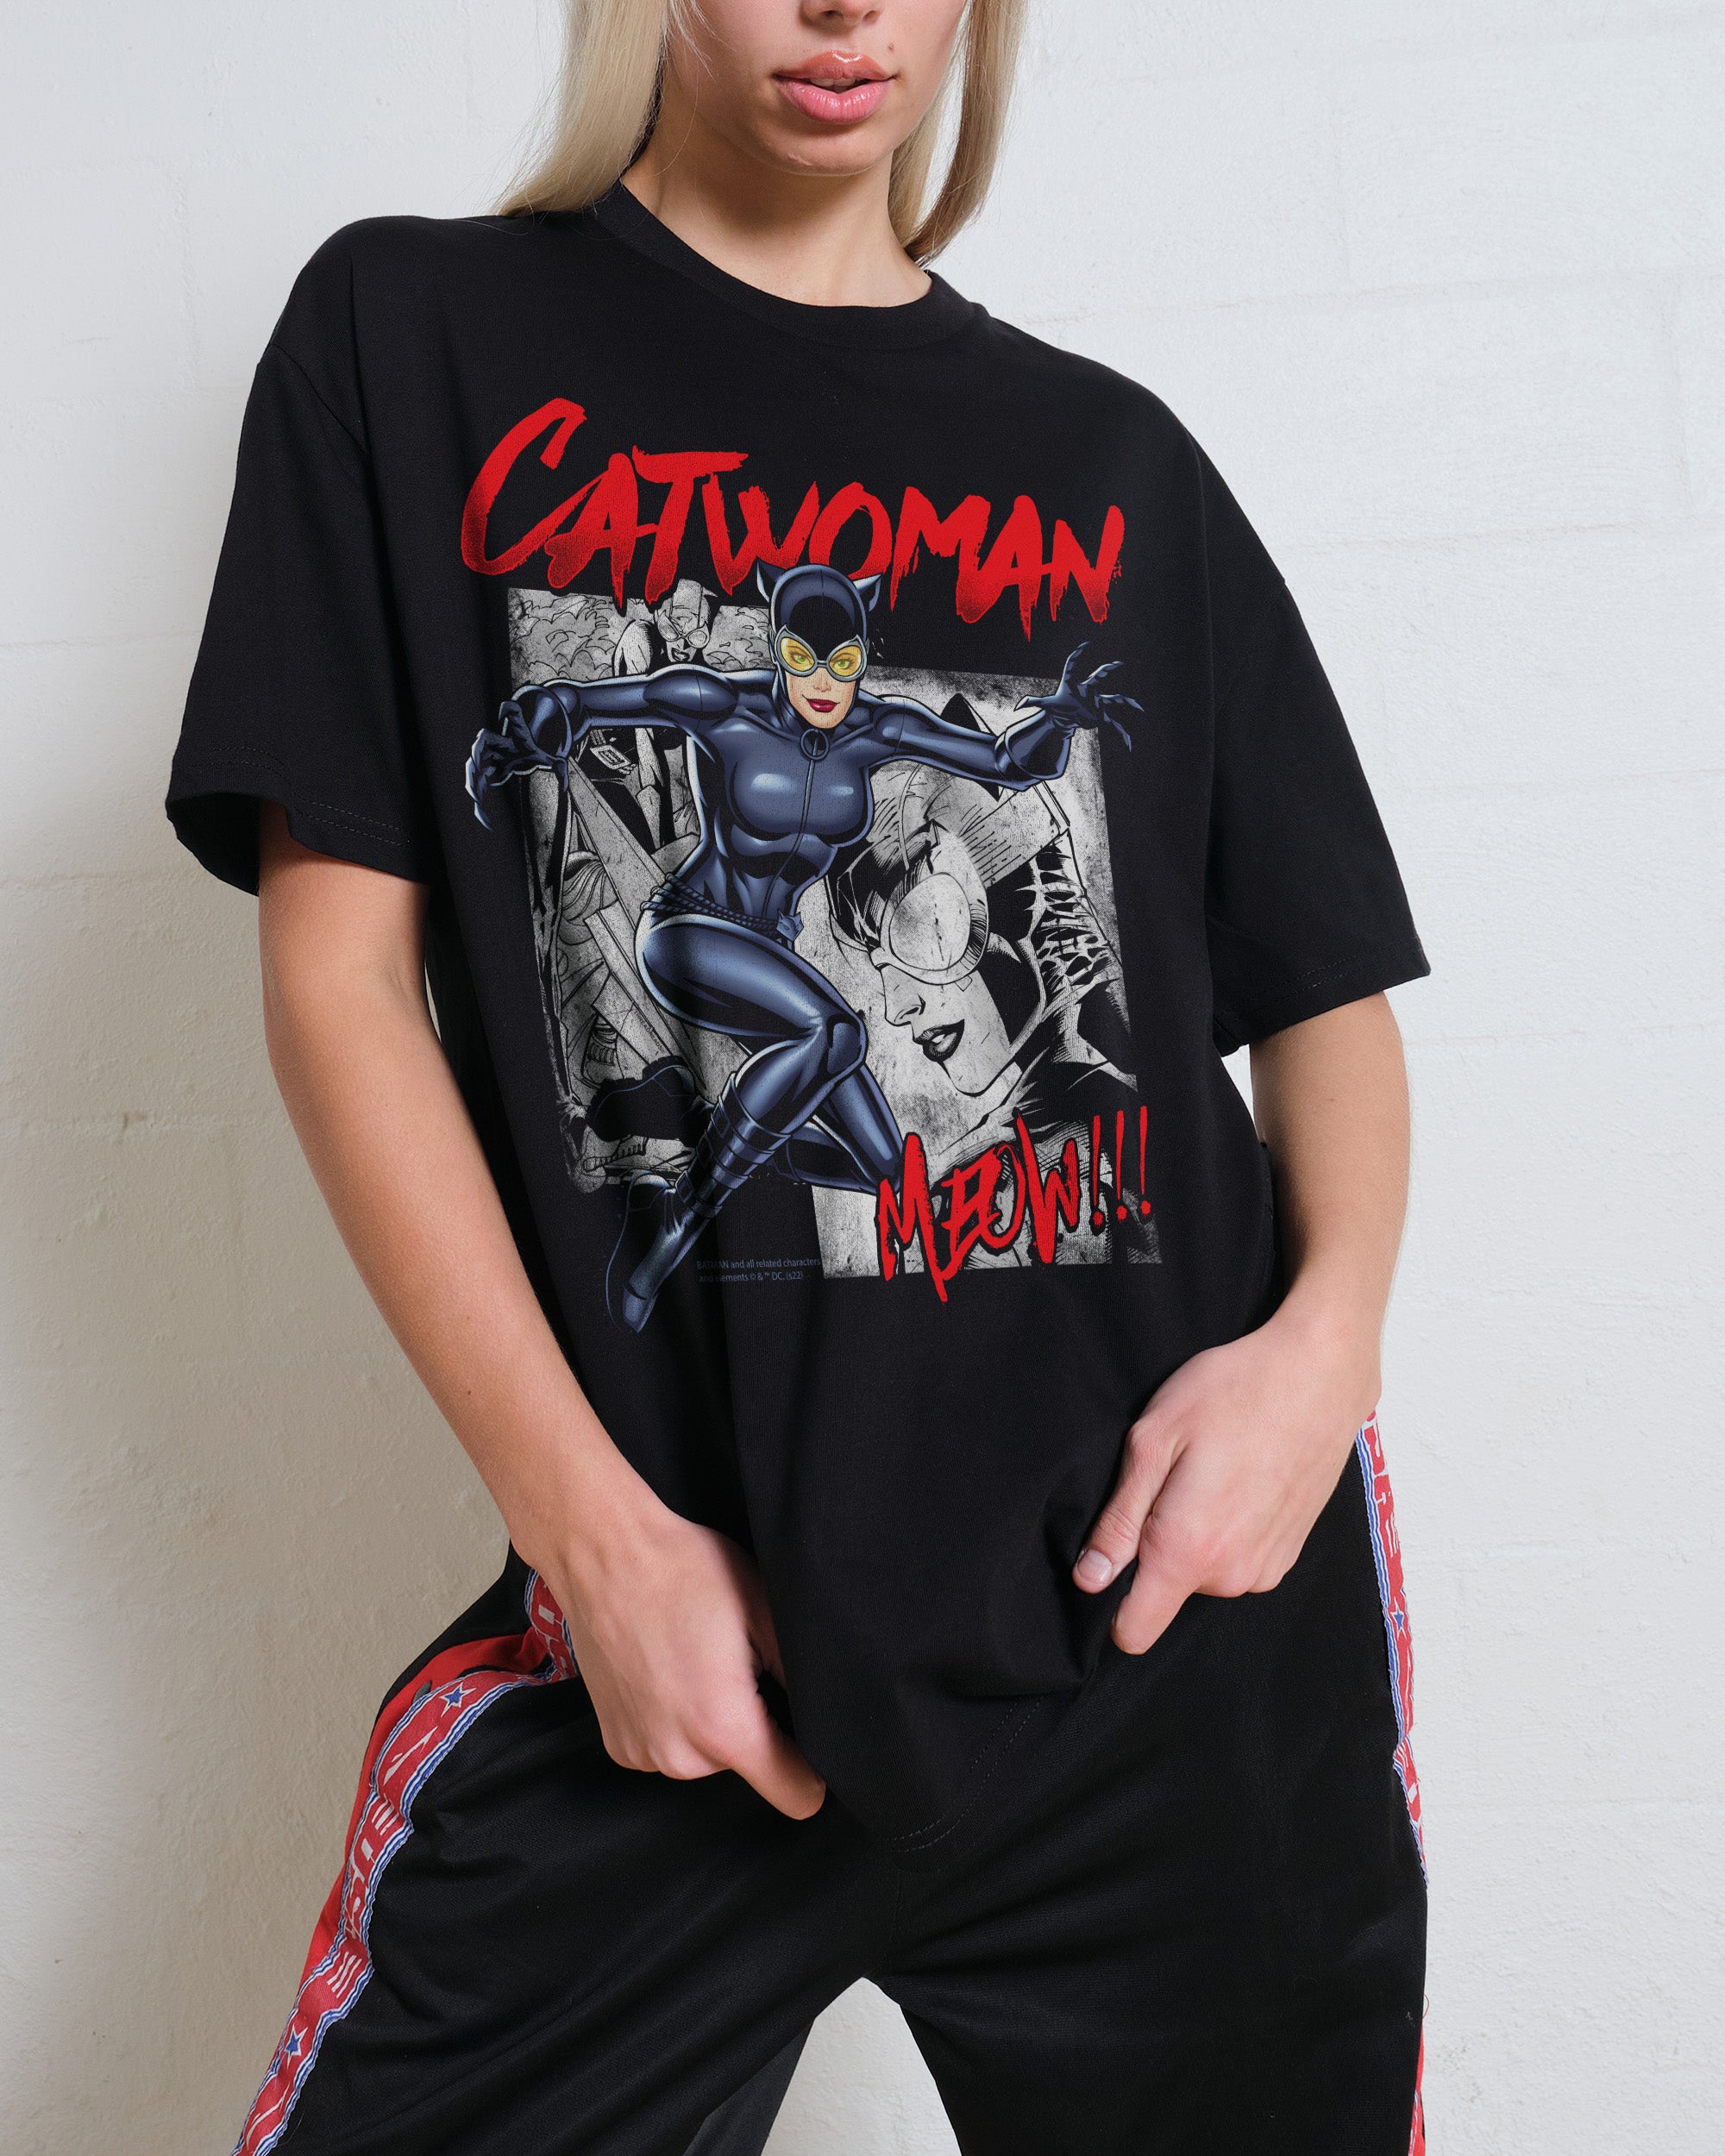 Catwoman T-Shirt